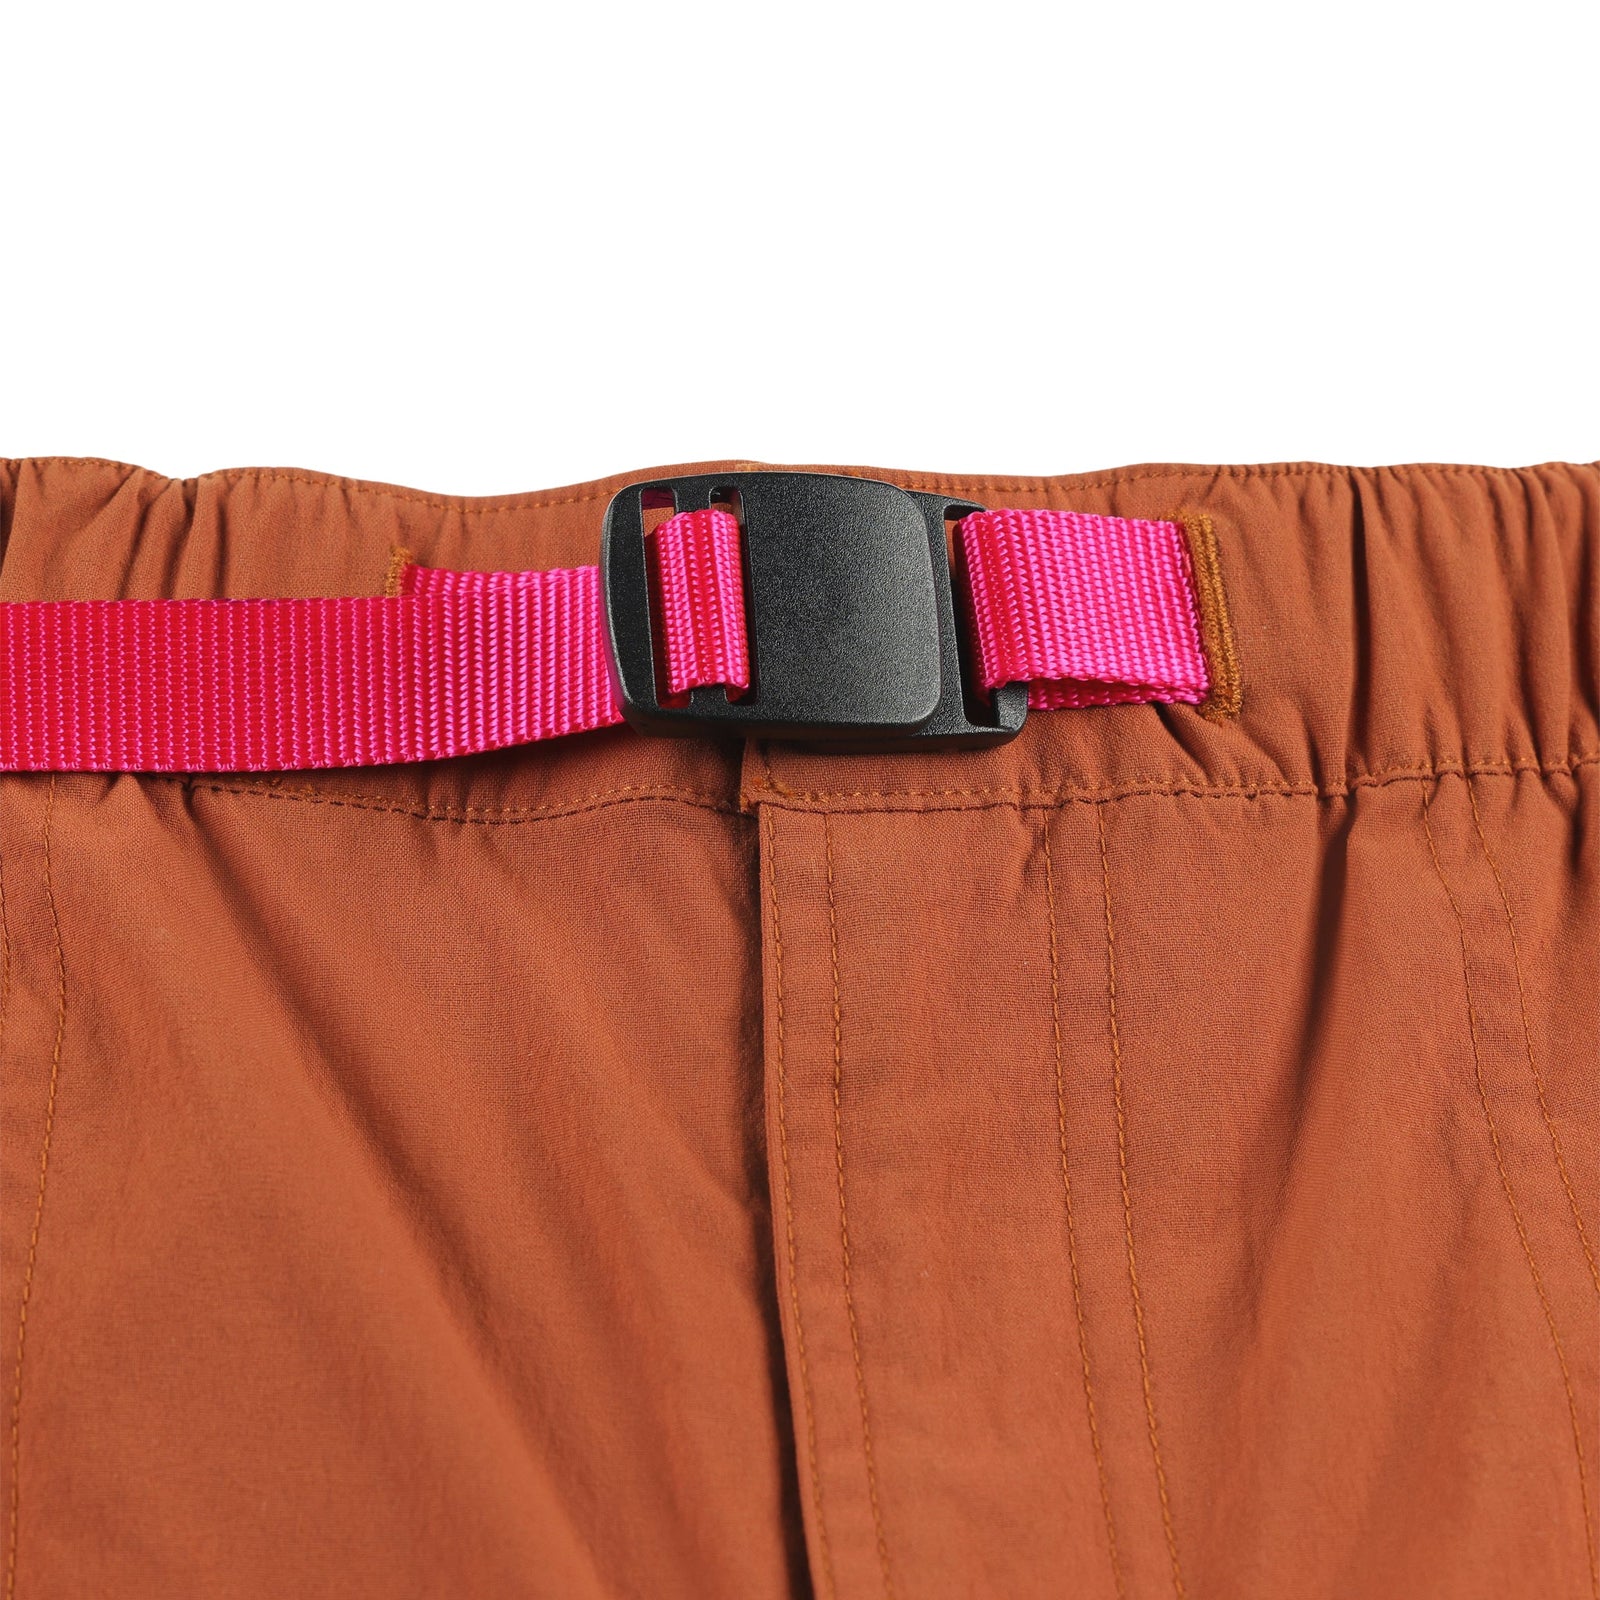 General Web belt on Topo Designs Women's River quick-dry swim Shorts in Brick orange.